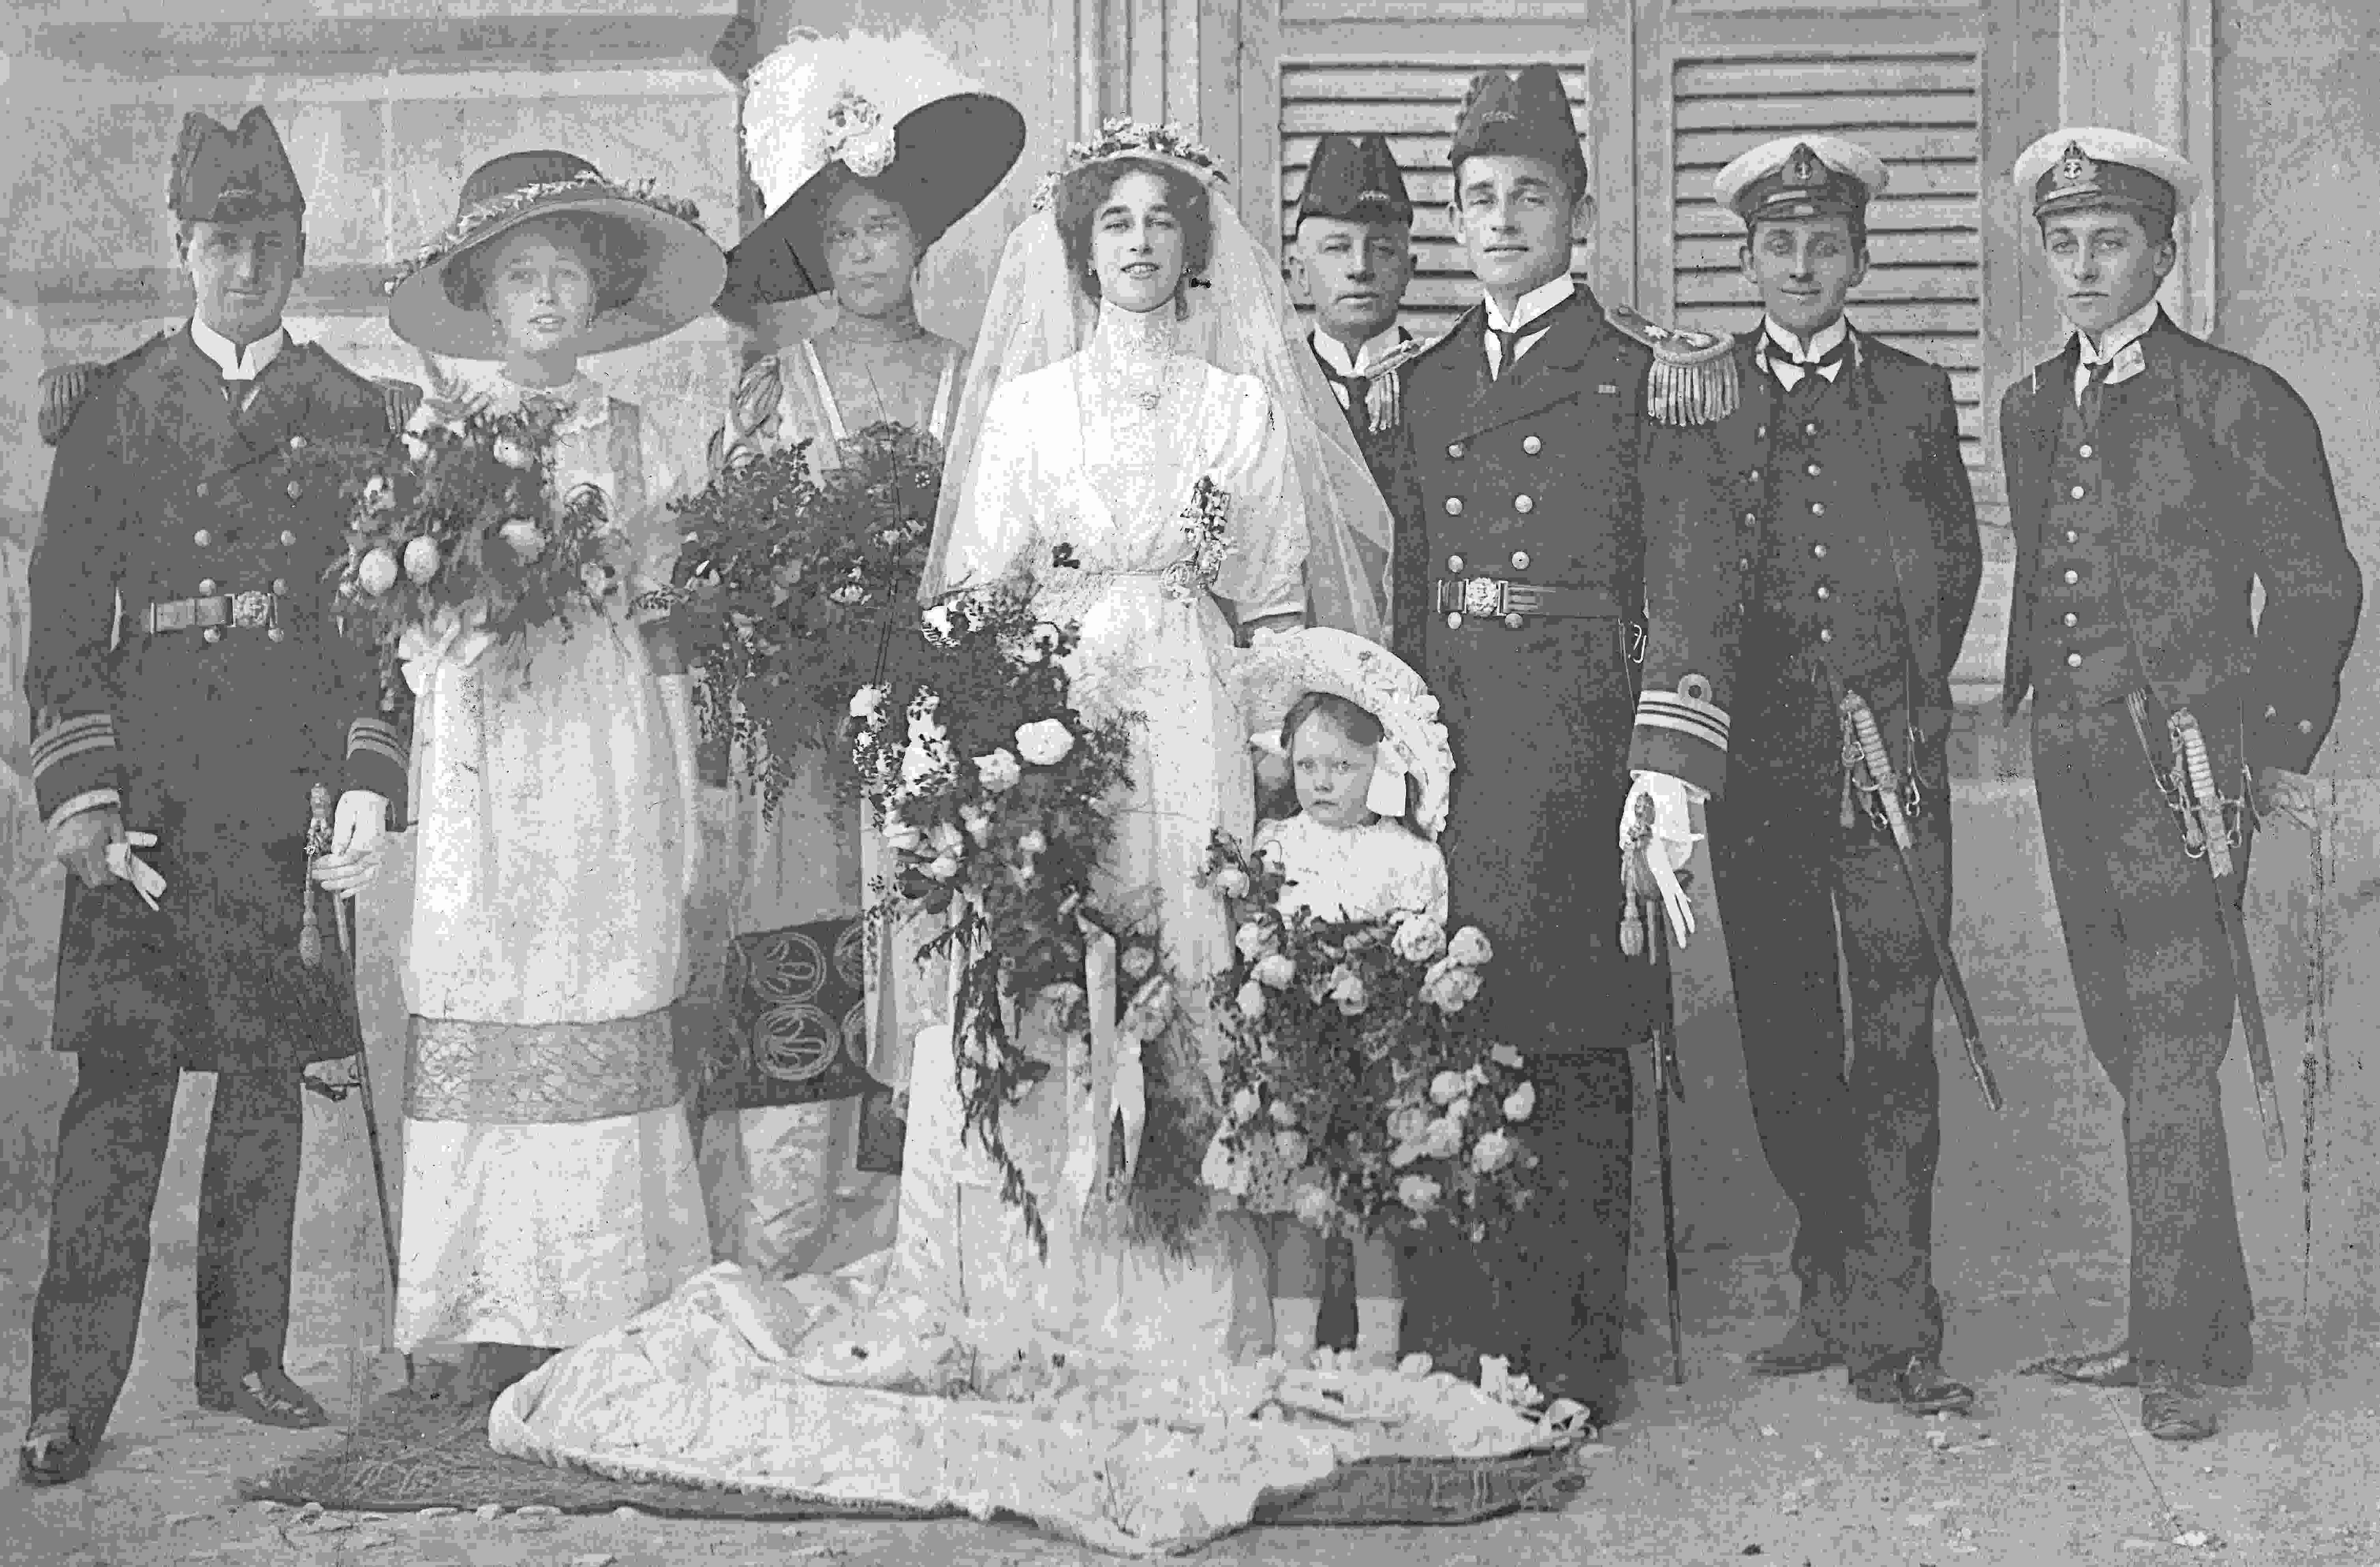 Parry Waymouth wedding 1911